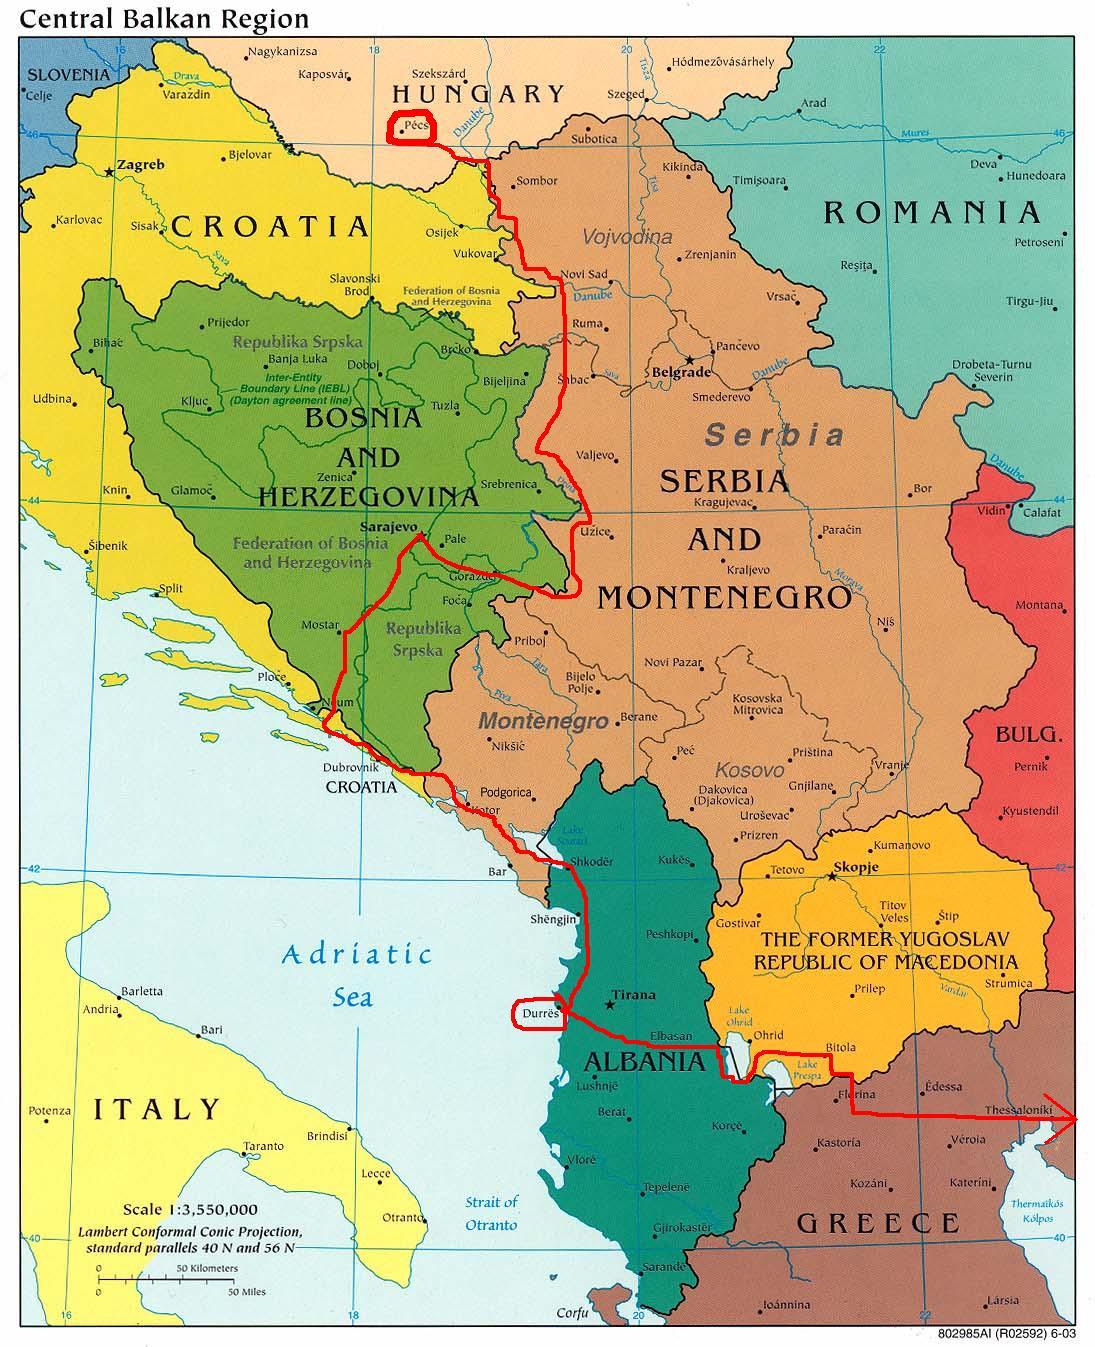 http://1.bp.blogspot.com/-ReiWpTXp4w4/TgYJAD4kpKI/AAAAAAAACRk/u1sRx-x15pc/s1600/Western-Balkans-Political-Map-2003--our%2Broute.JPG